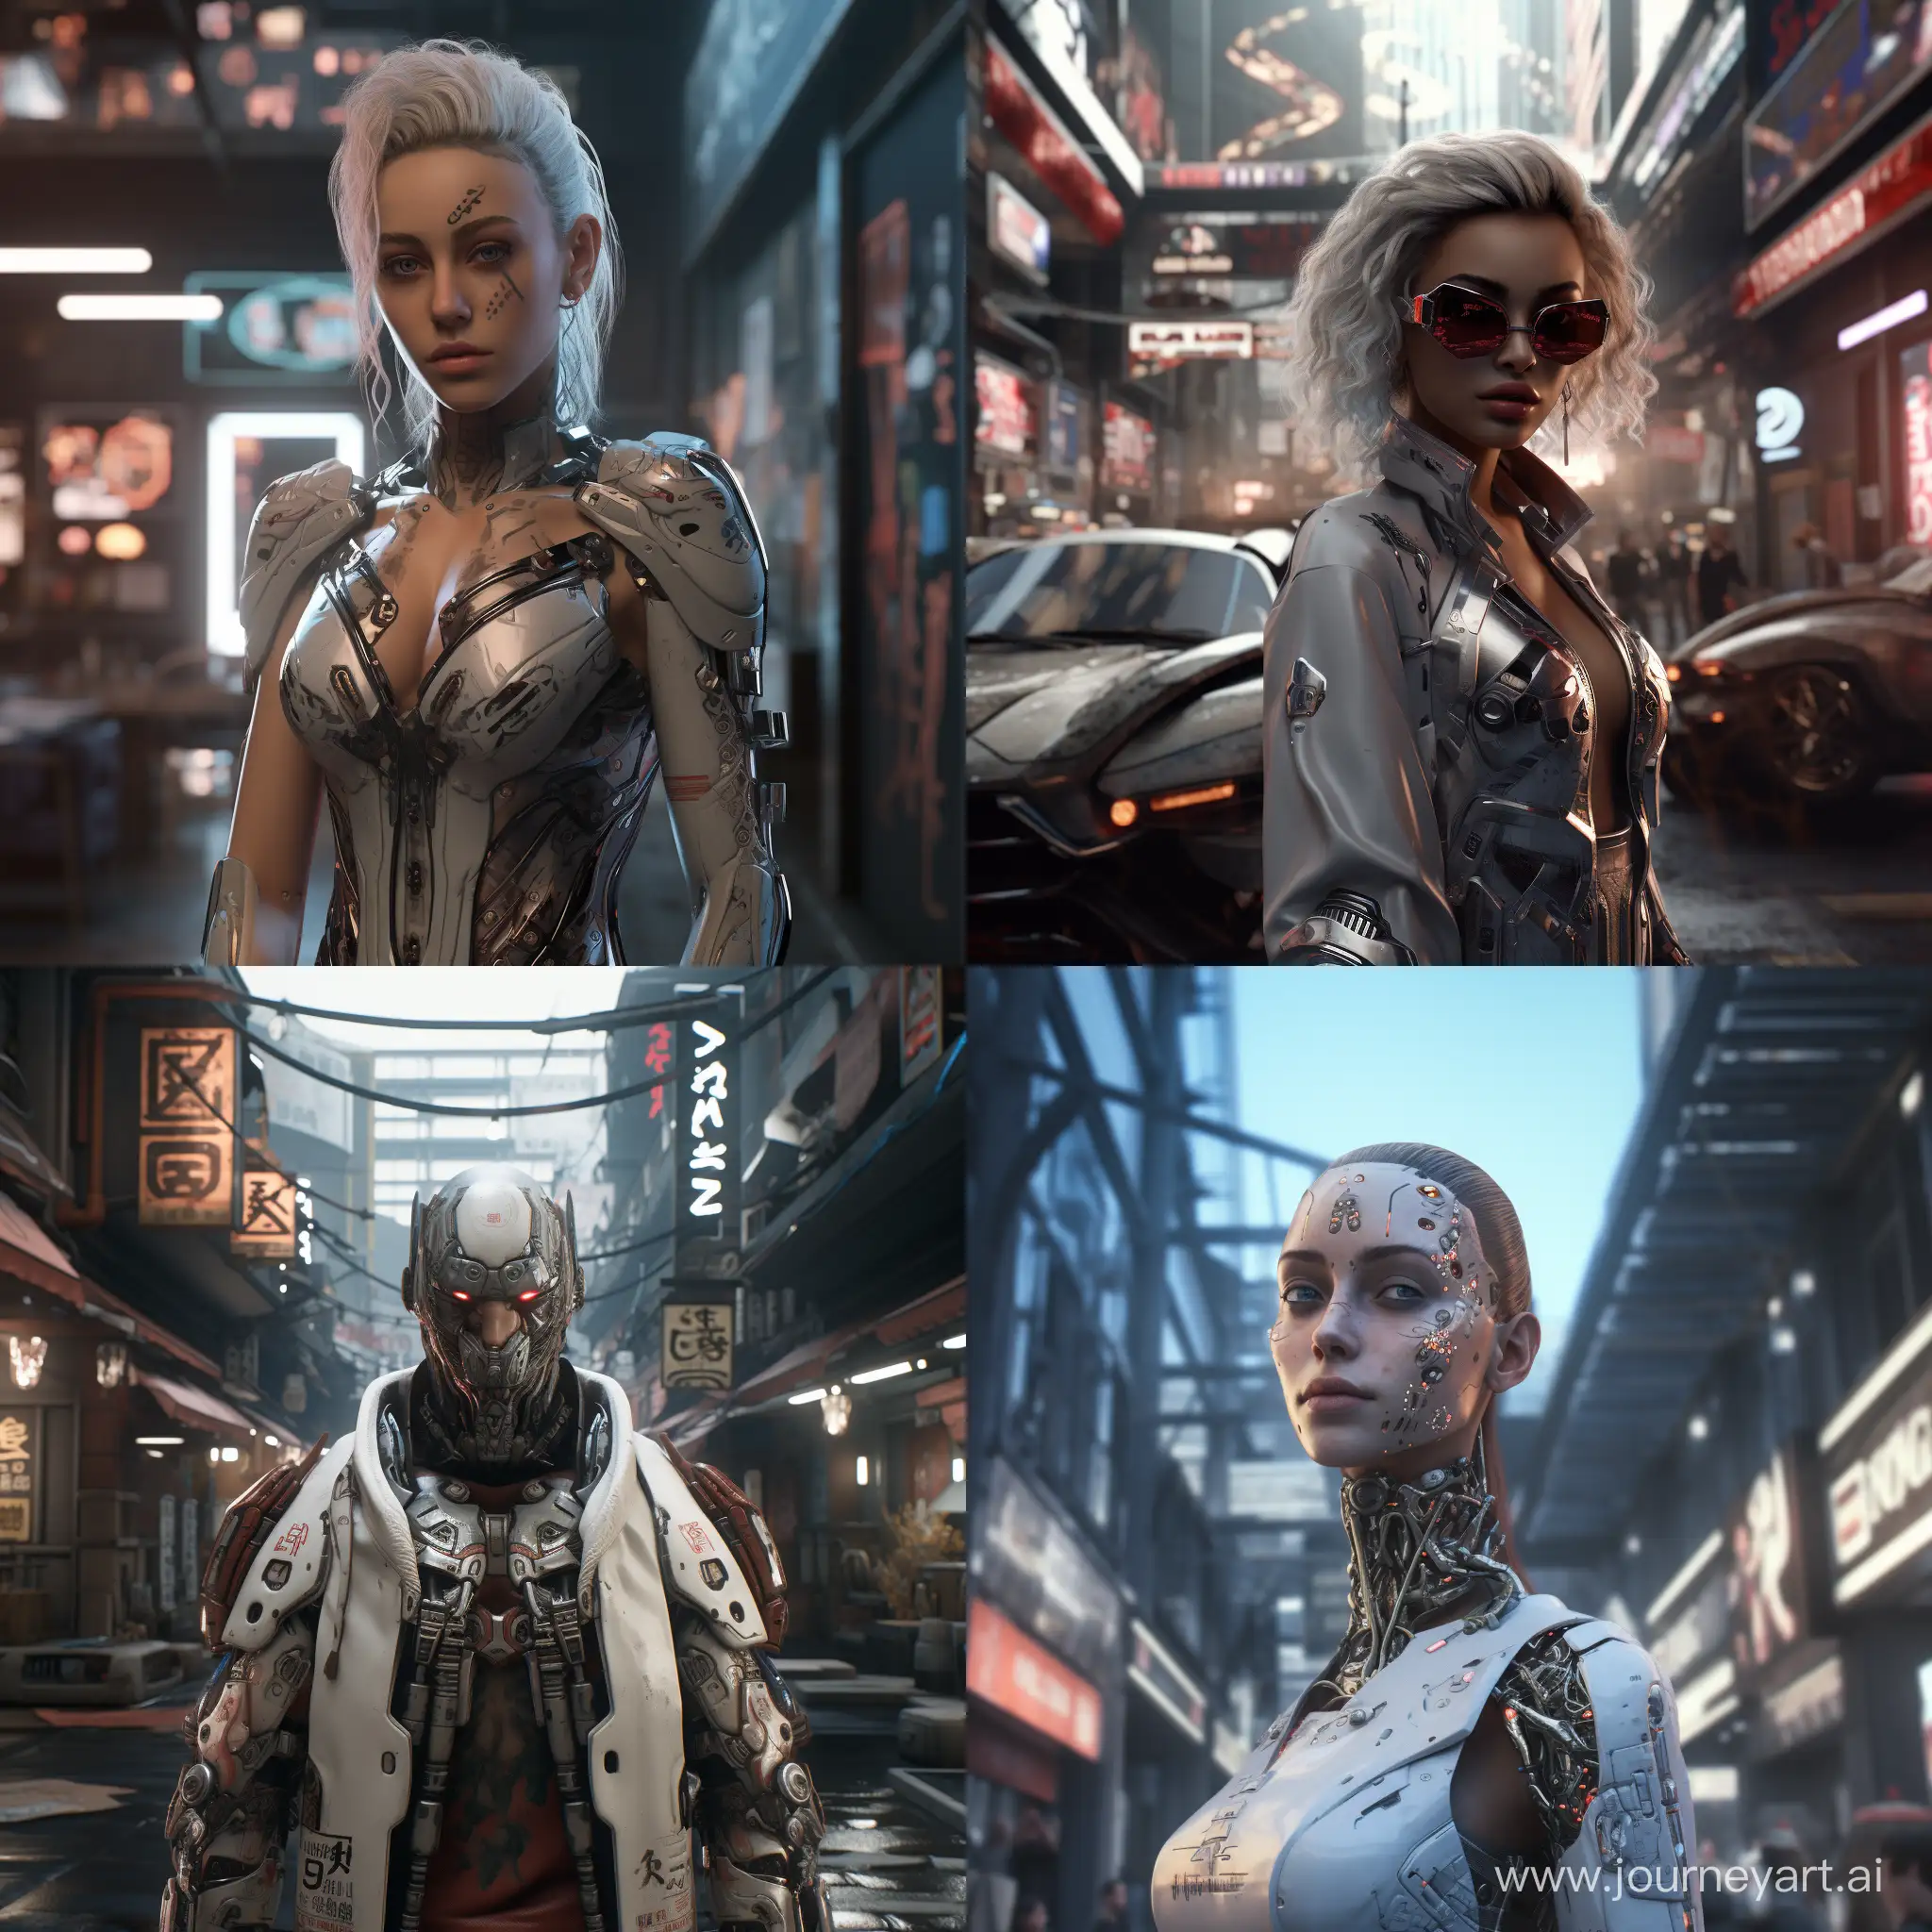 Futuristic-Cyberpunk-Cityscape-with-White-Knight-in-8K-VRay-Rendering